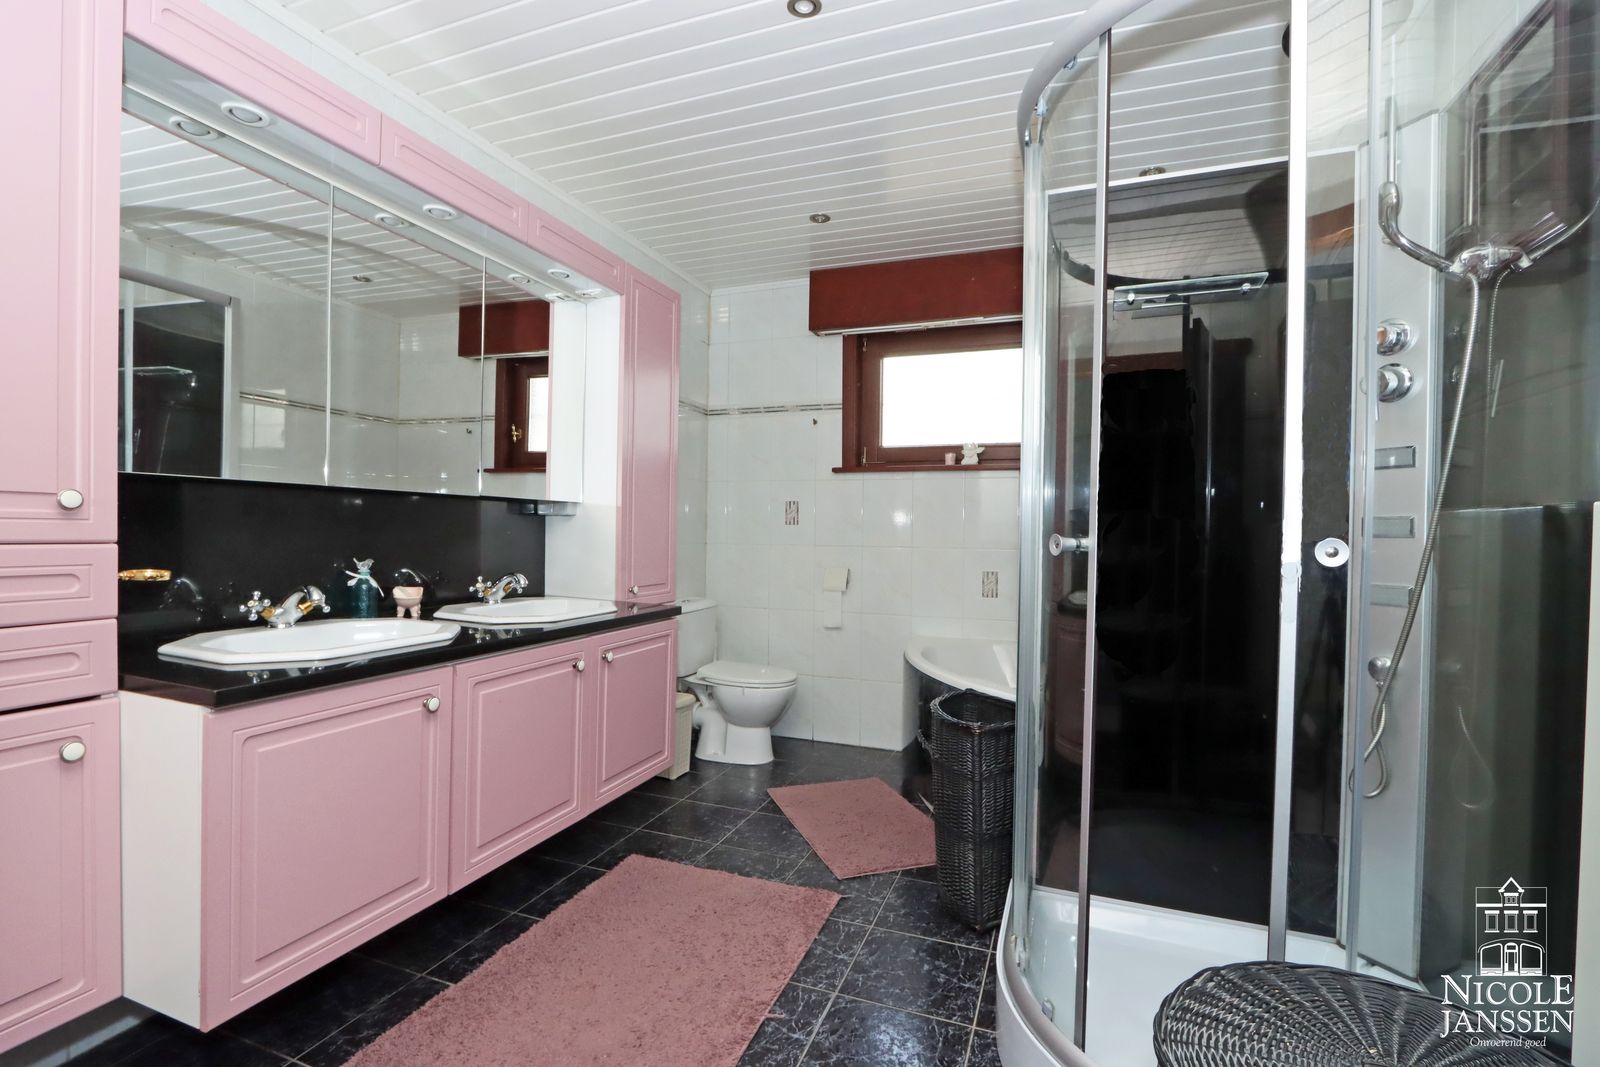 Nicole Janssen huis te koop Heuvelsvenlaan 2 te Lanklaar (badkamer)_bewerkt-1.jpg